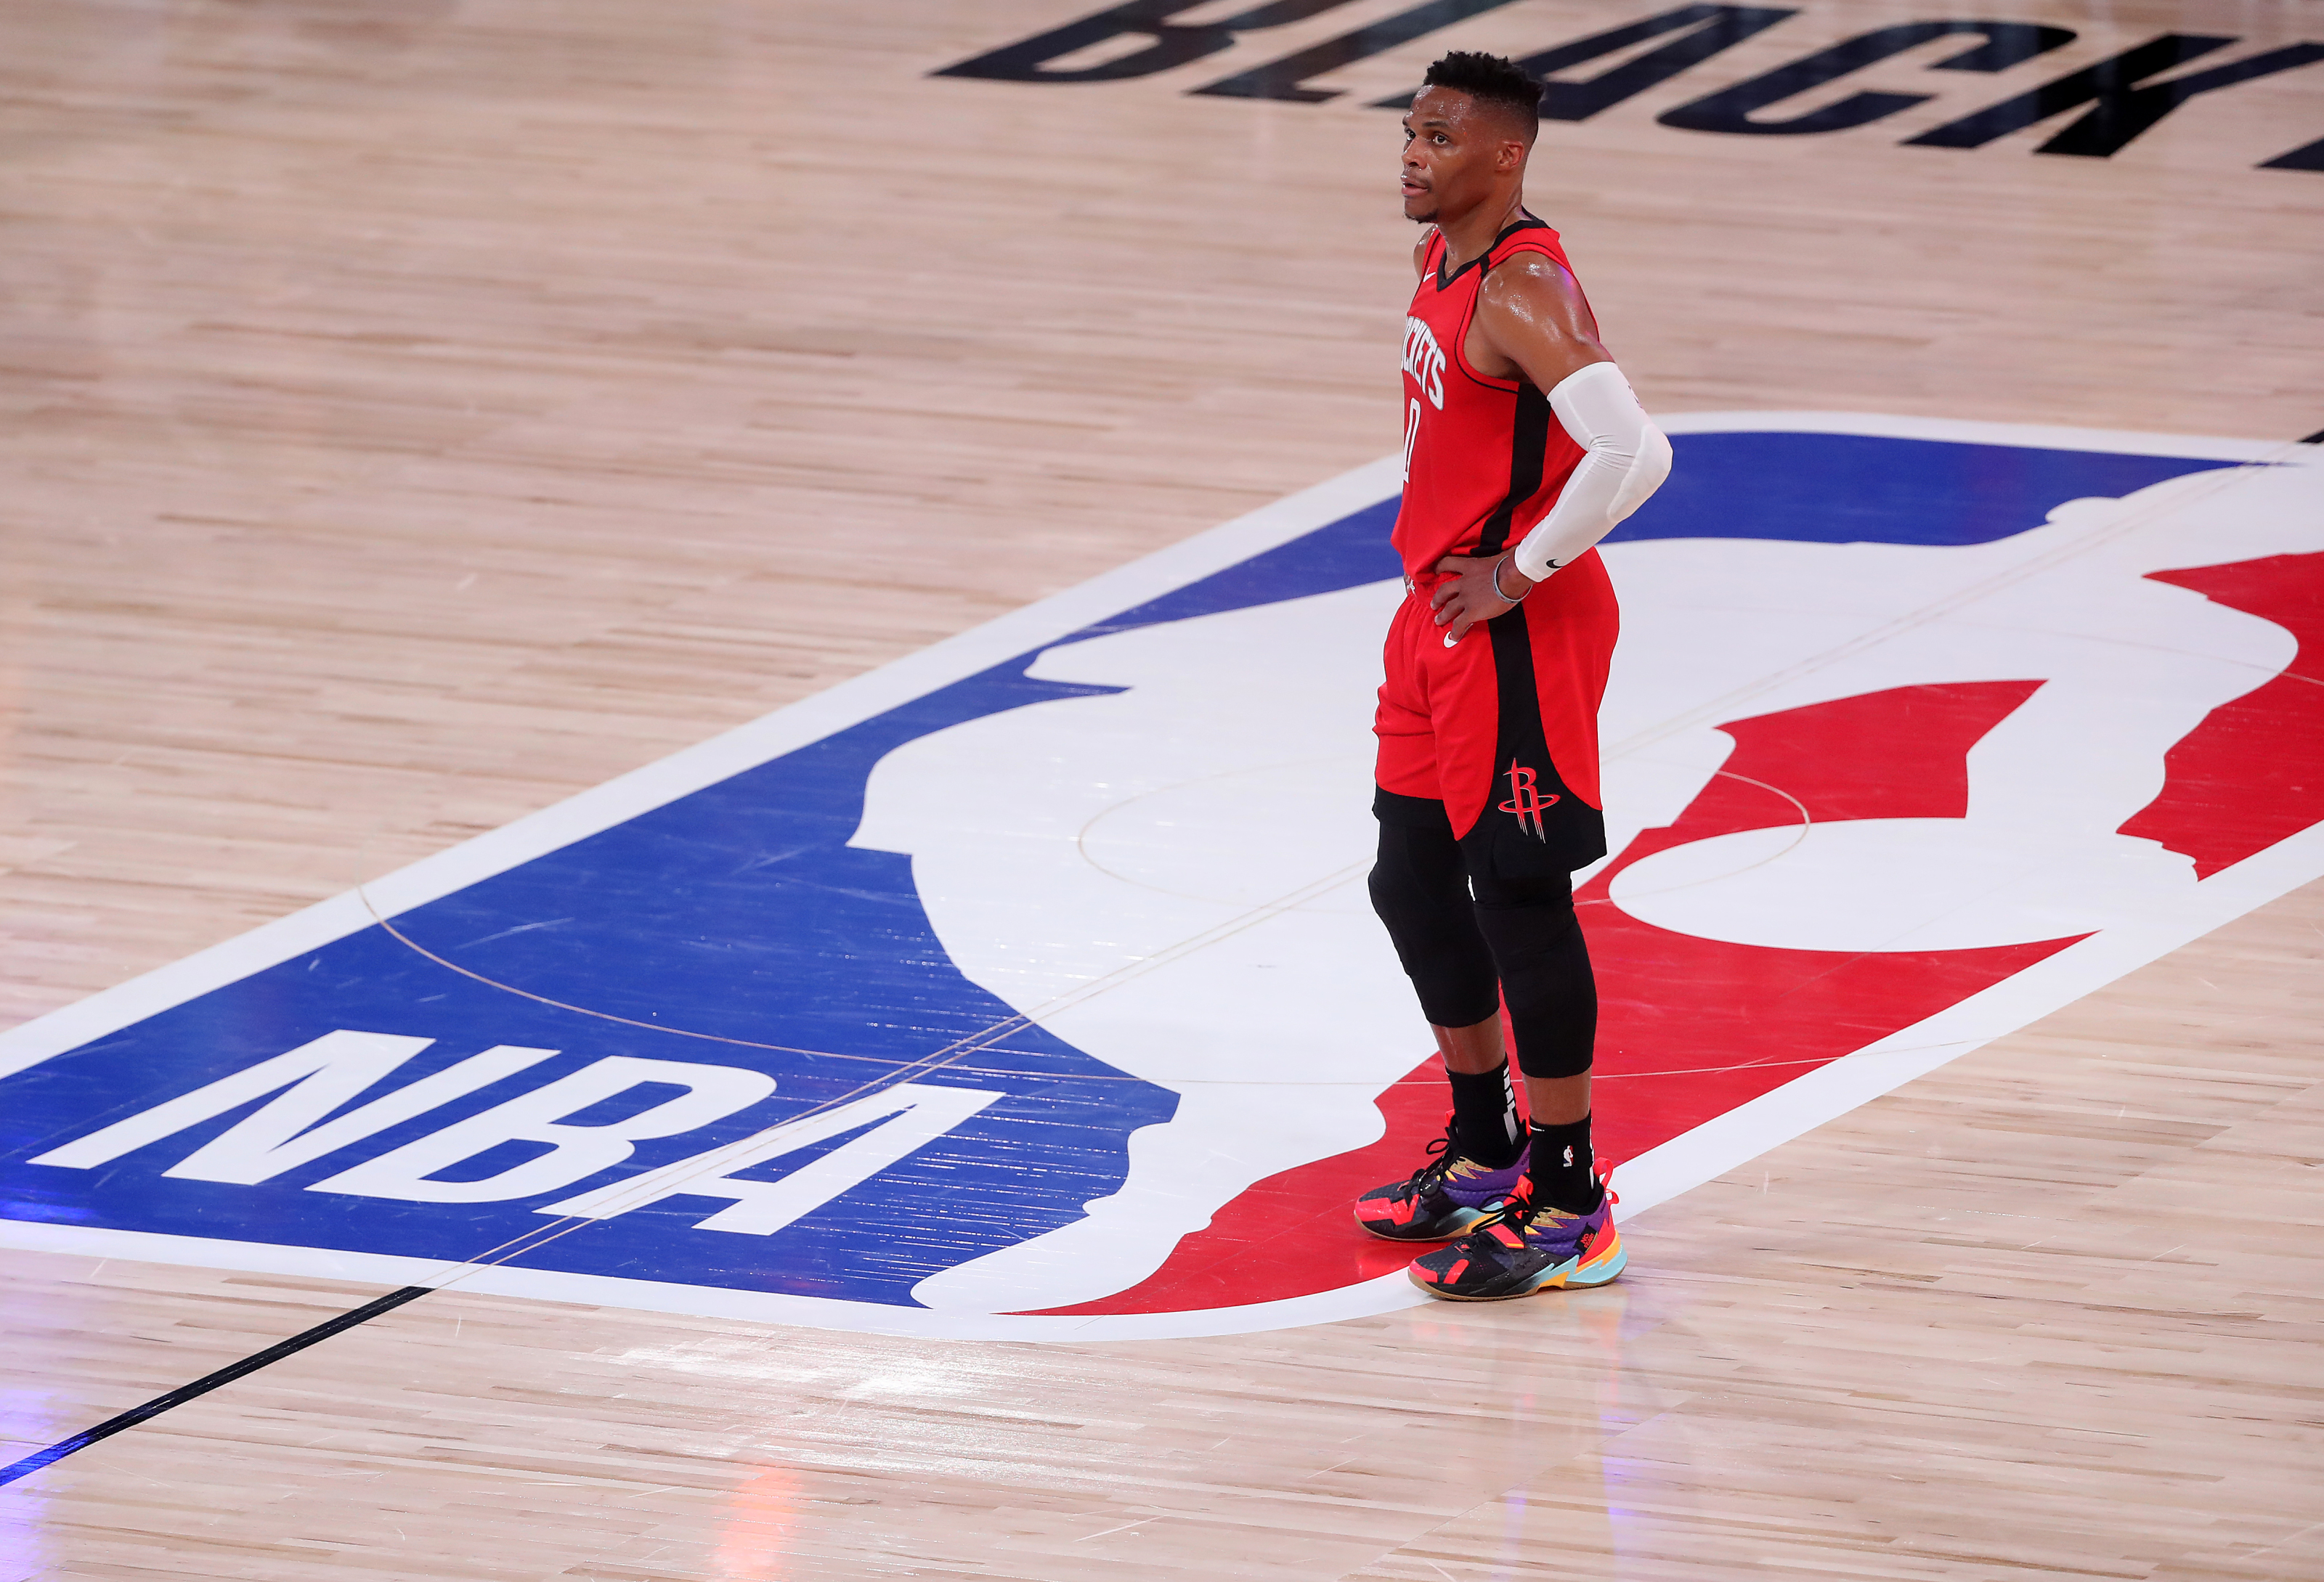 NBA Capsules: Westbrook scores 30 as Thunder top Rockets